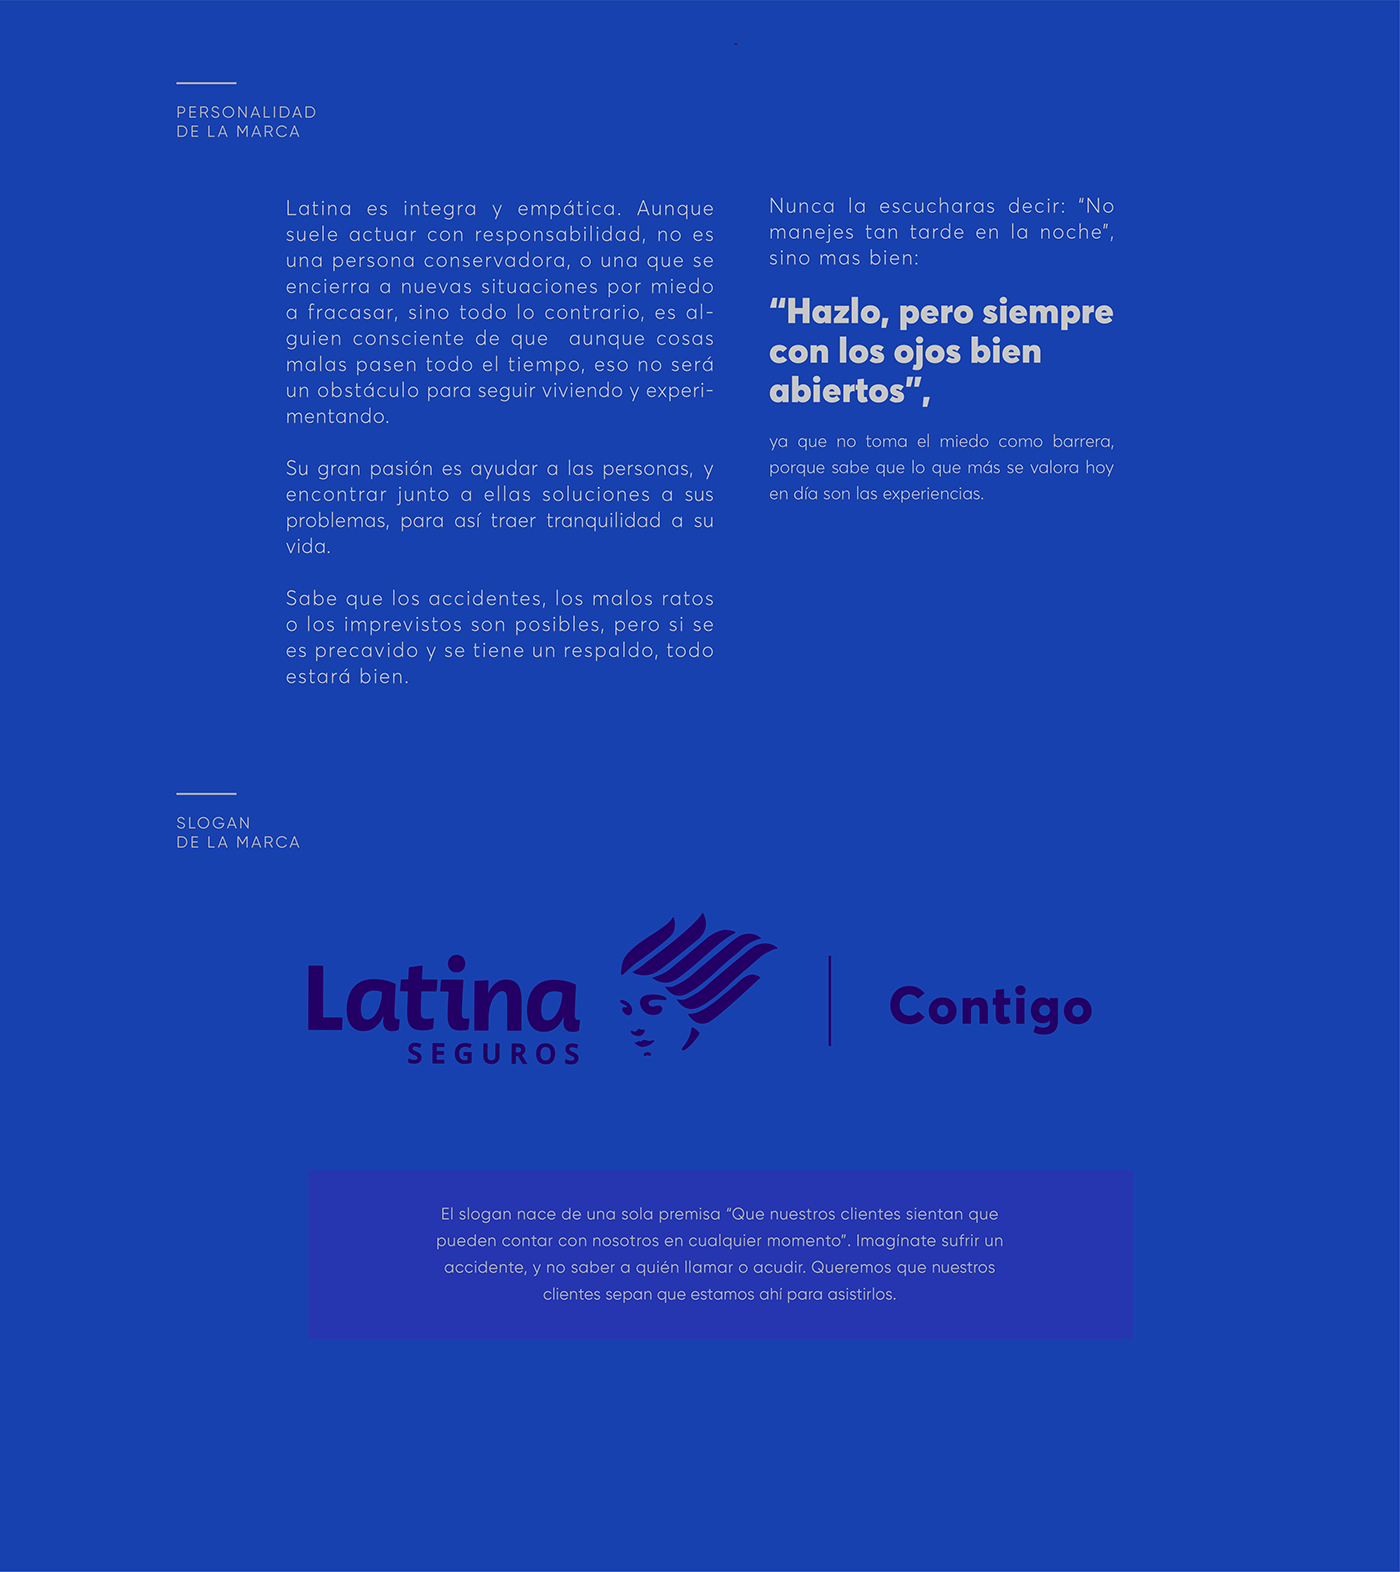 latina Seguros rebranding humano insurance